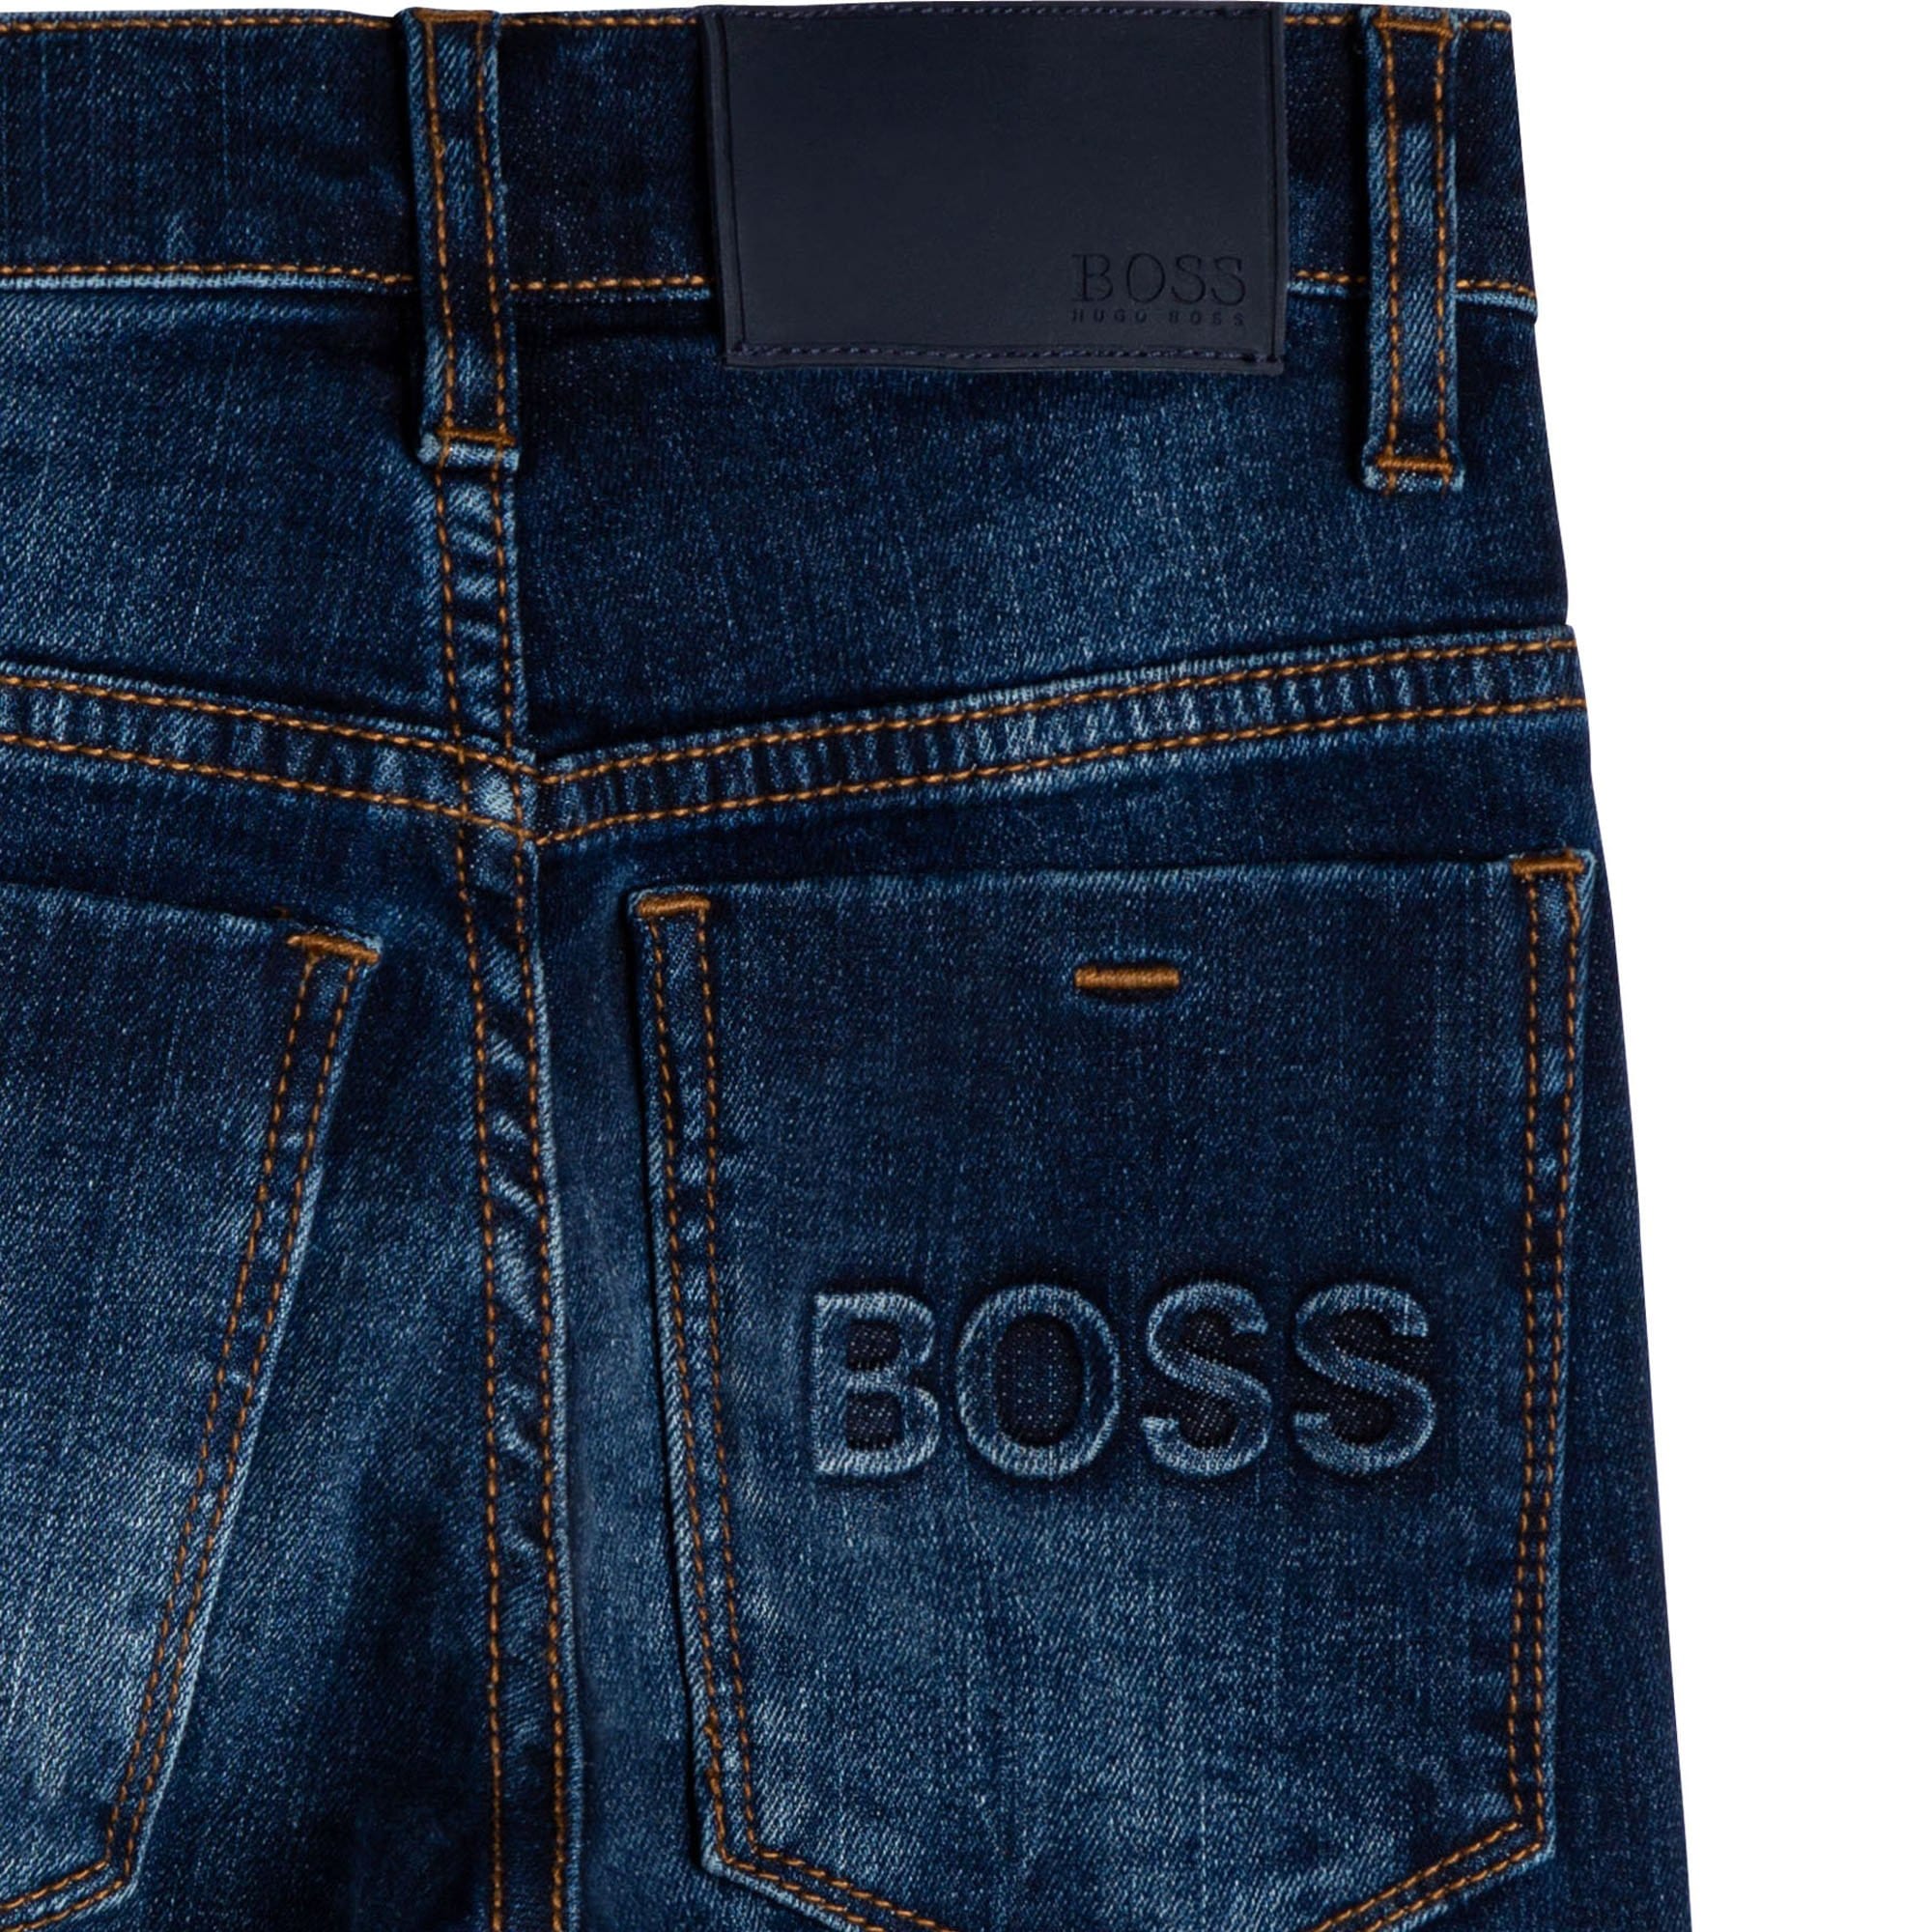 HUGO BOSS - Jeans - Stone